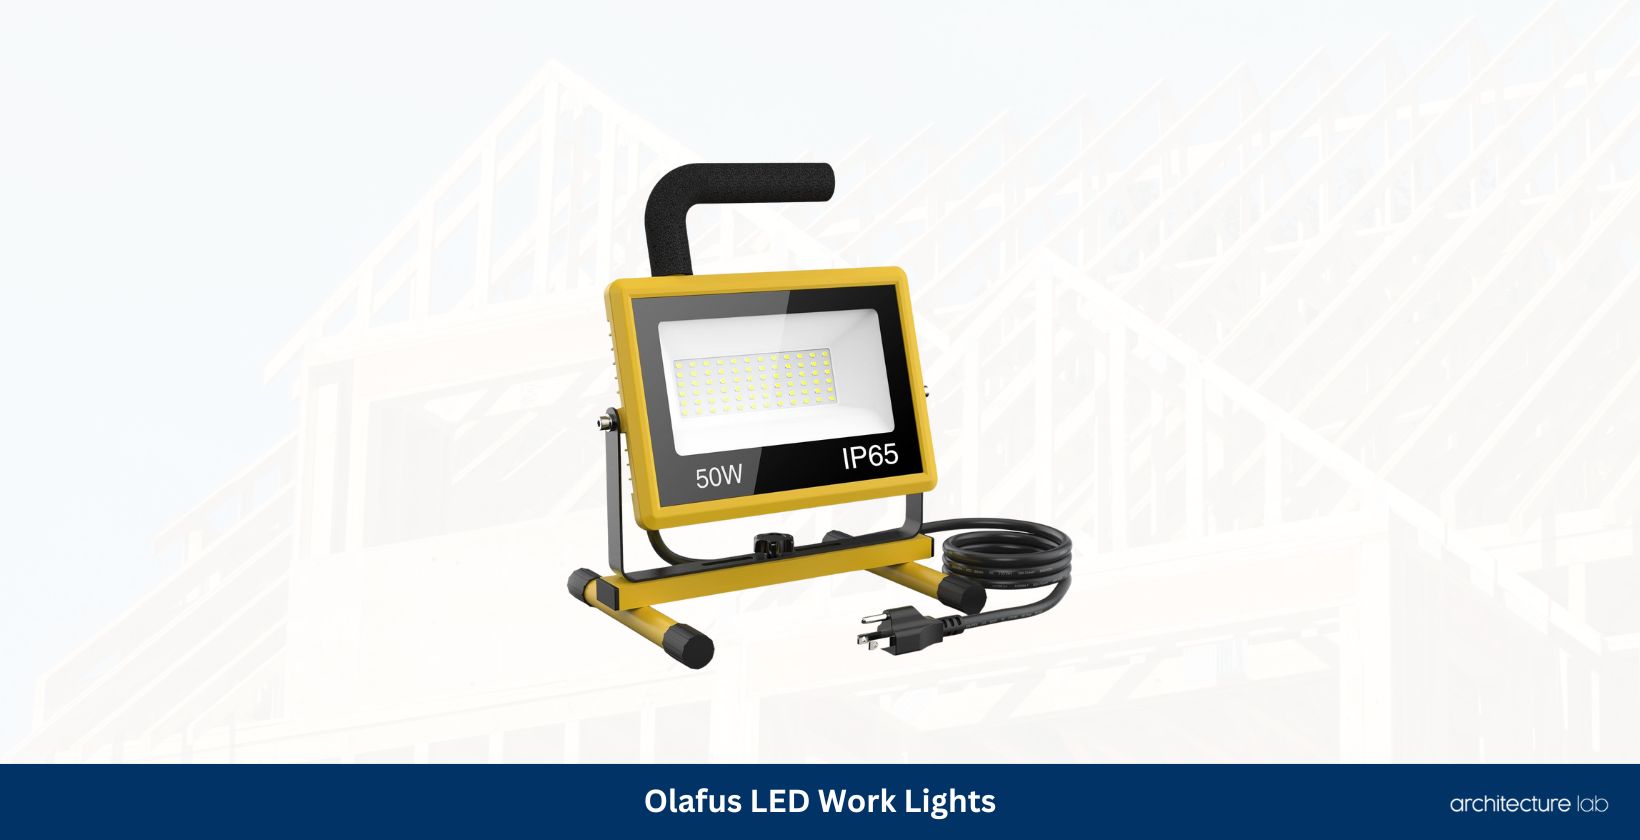 Olafus led work lights